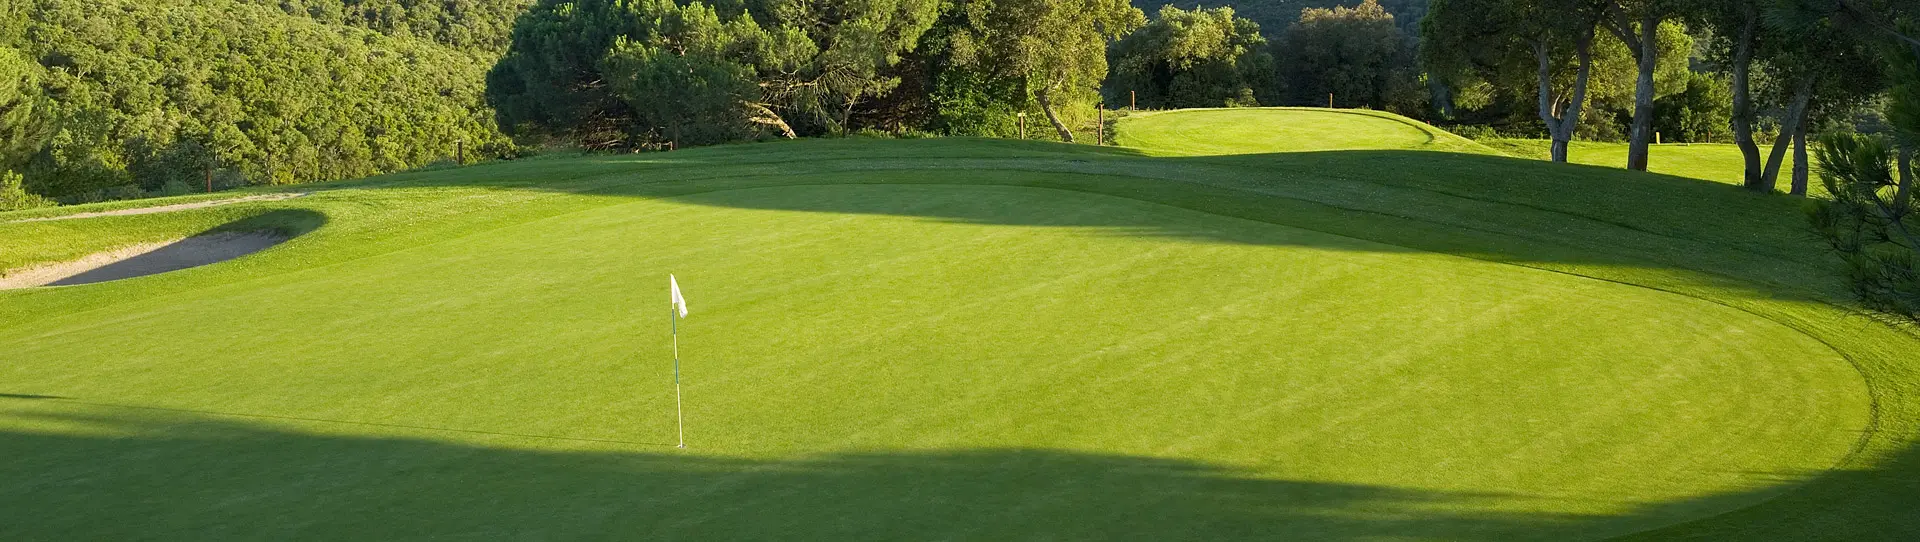 Spain Golf Driving Range - Golf d'Aro - Mas Nou Academy - Photo 2